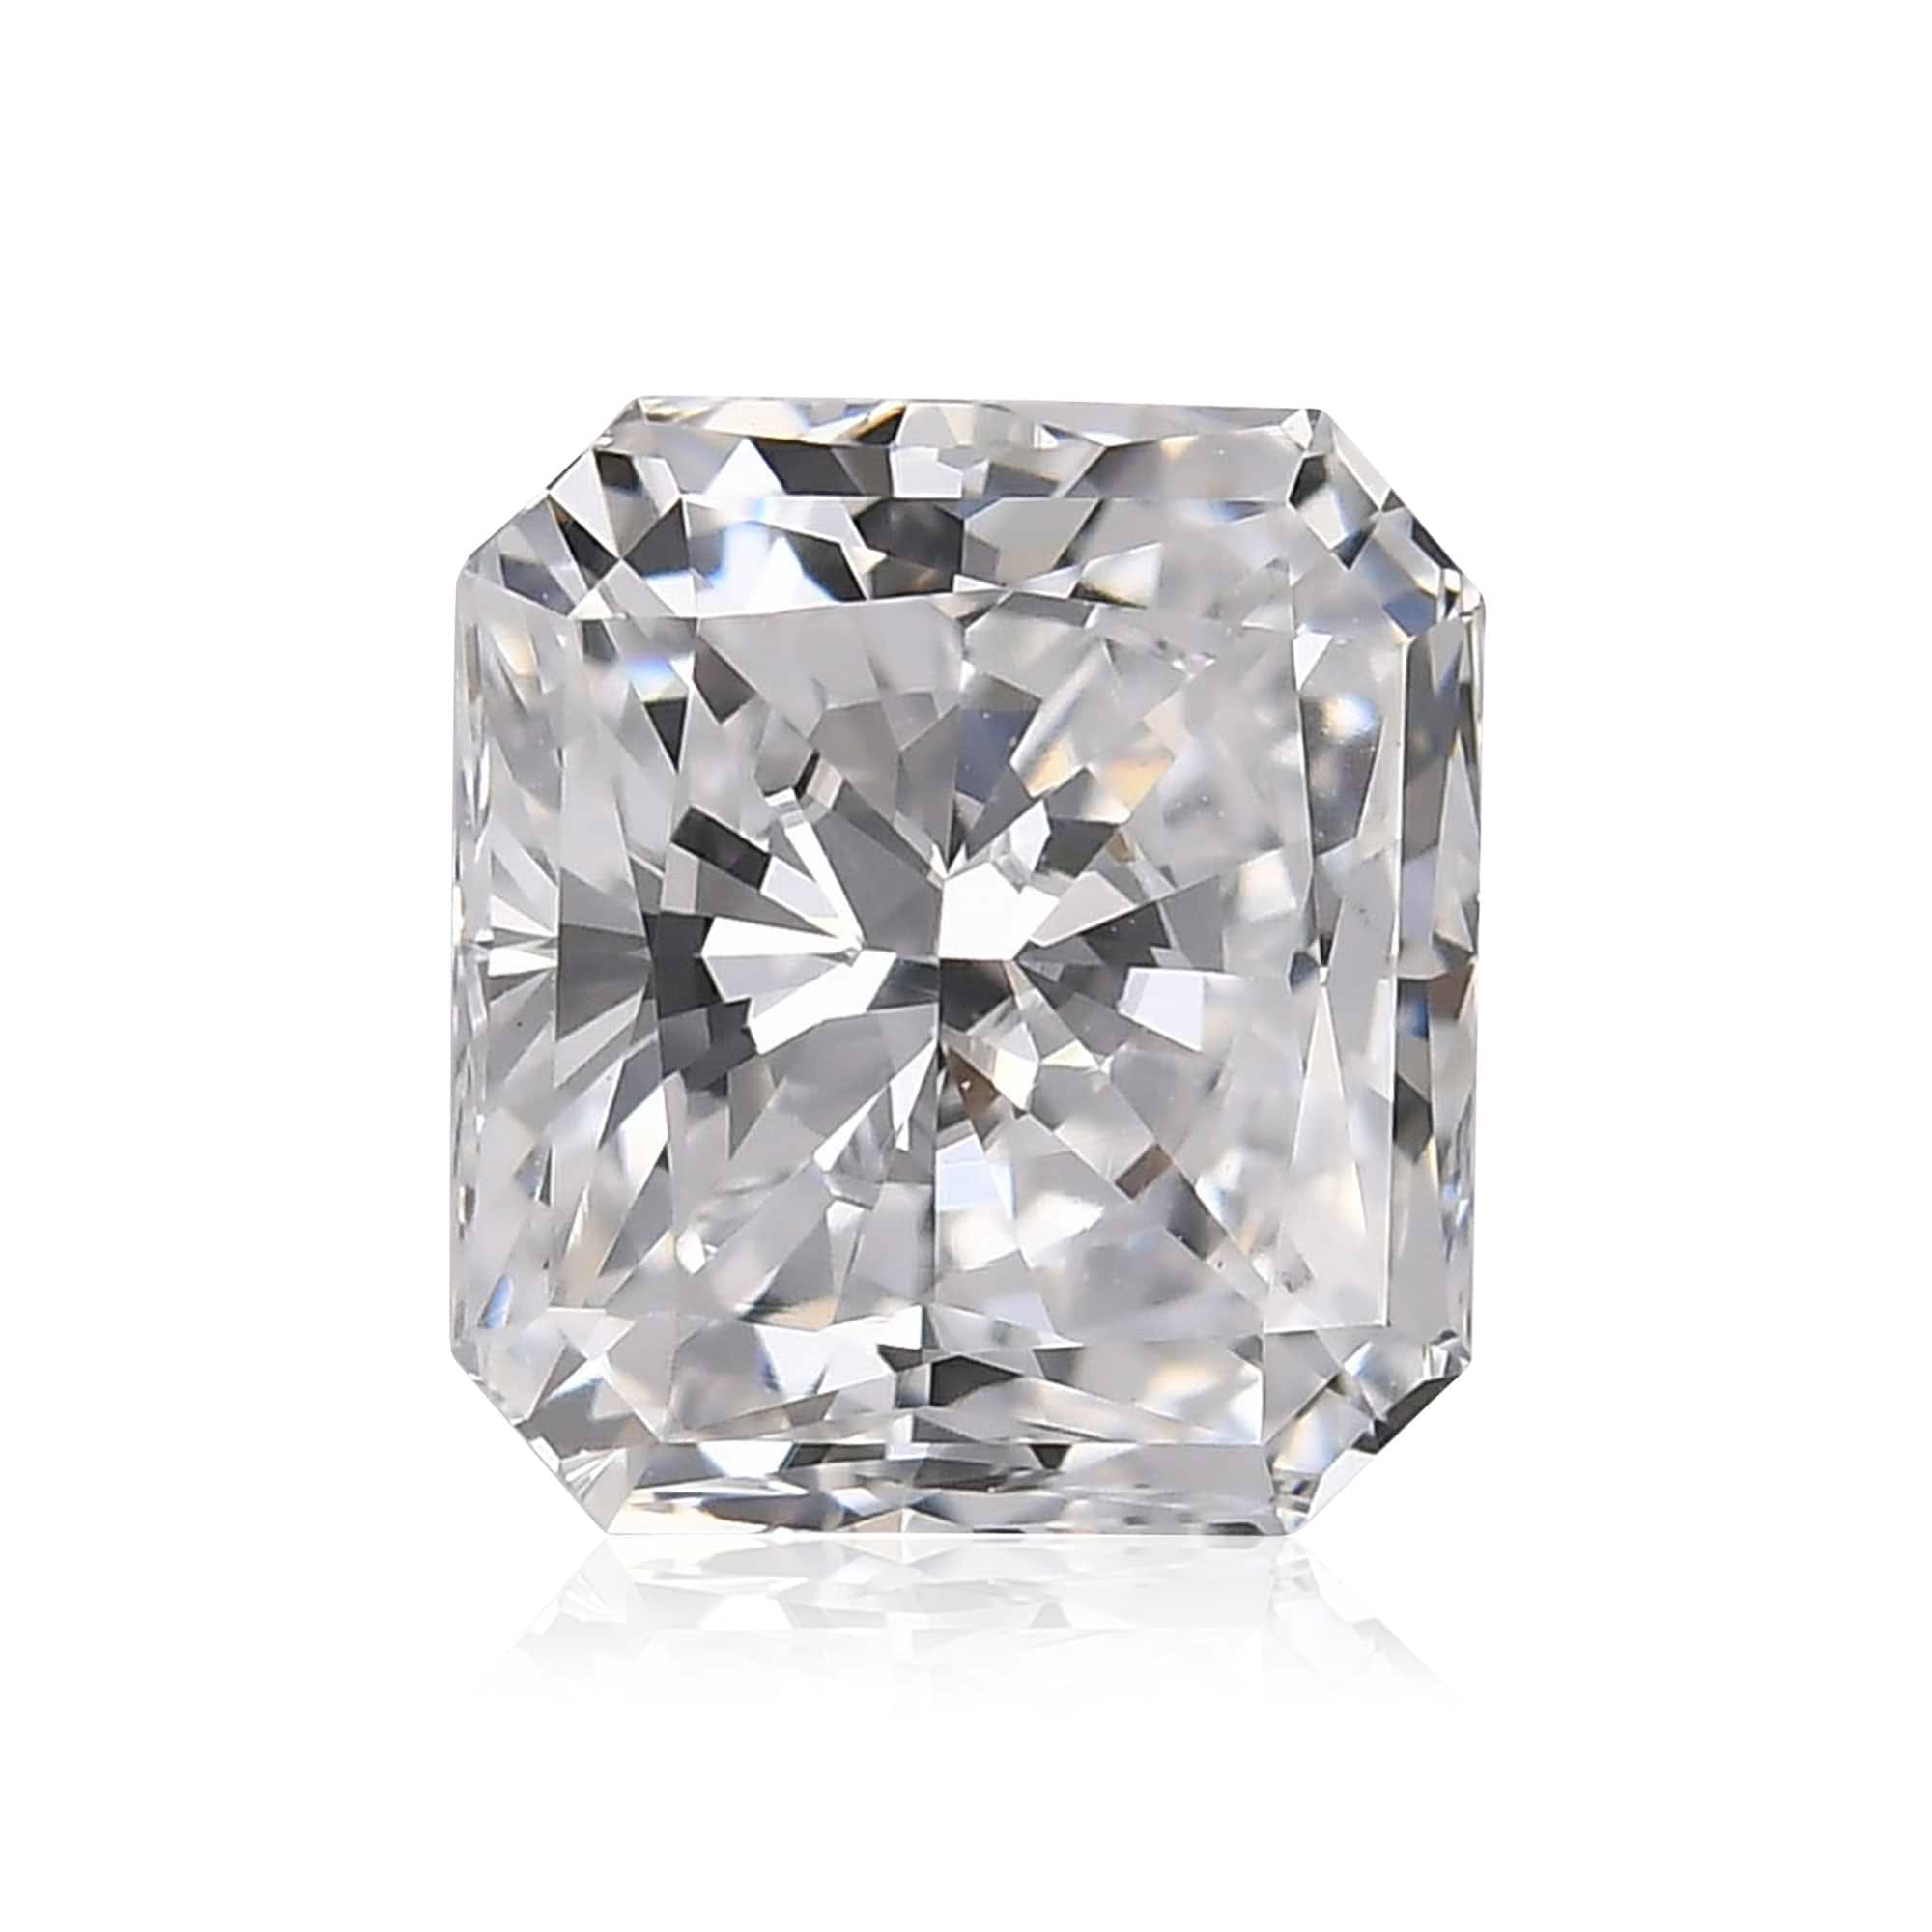 LEIBISH 3.01 carat, D Diamond, Radiant Shape, VVS1 Clarity